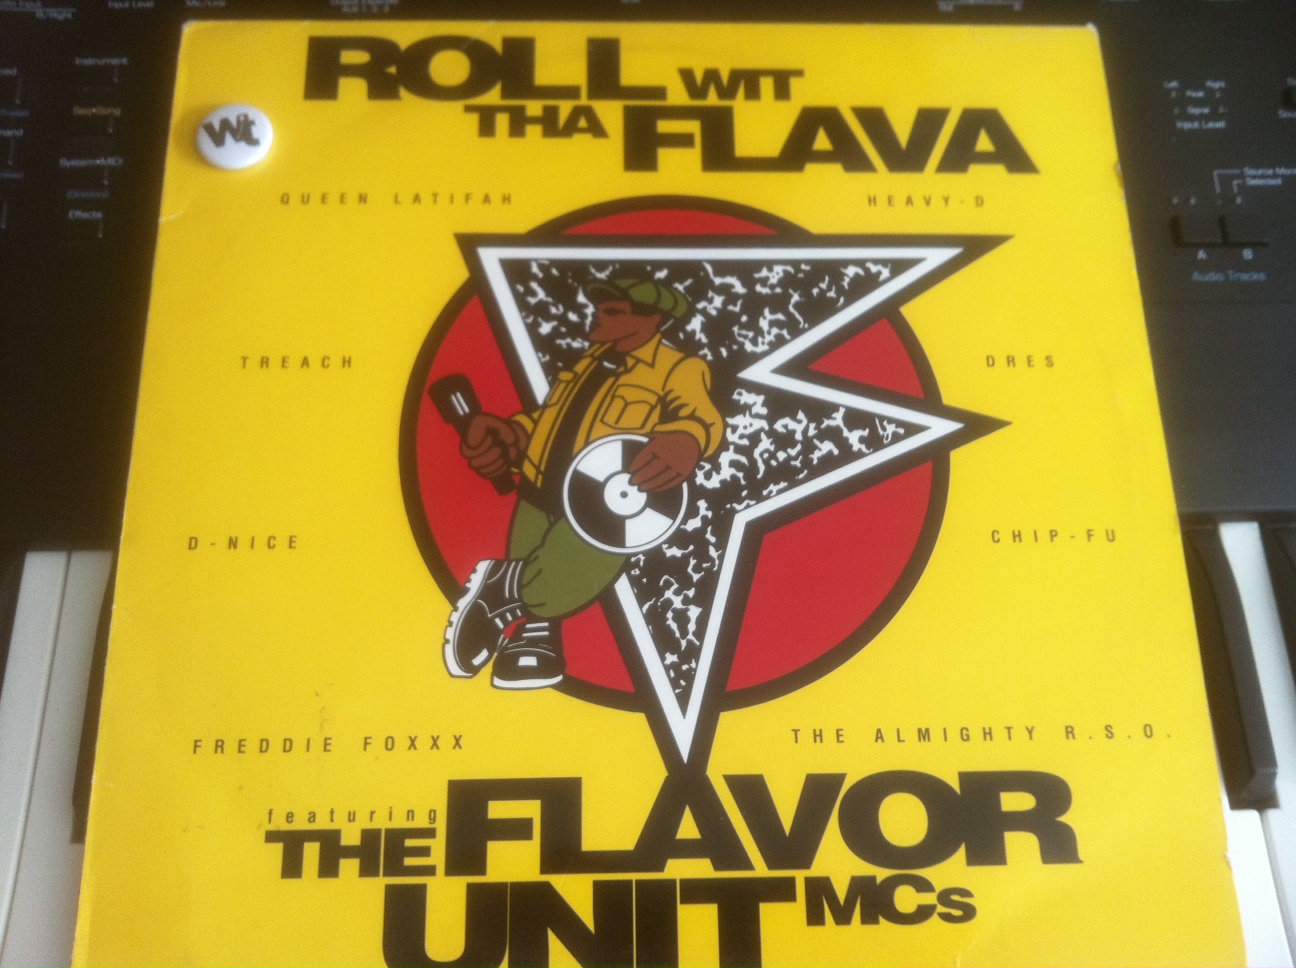 Preuzimanje datoteka Flavor Unit MC's - Roll With Tha Flava (Extended)